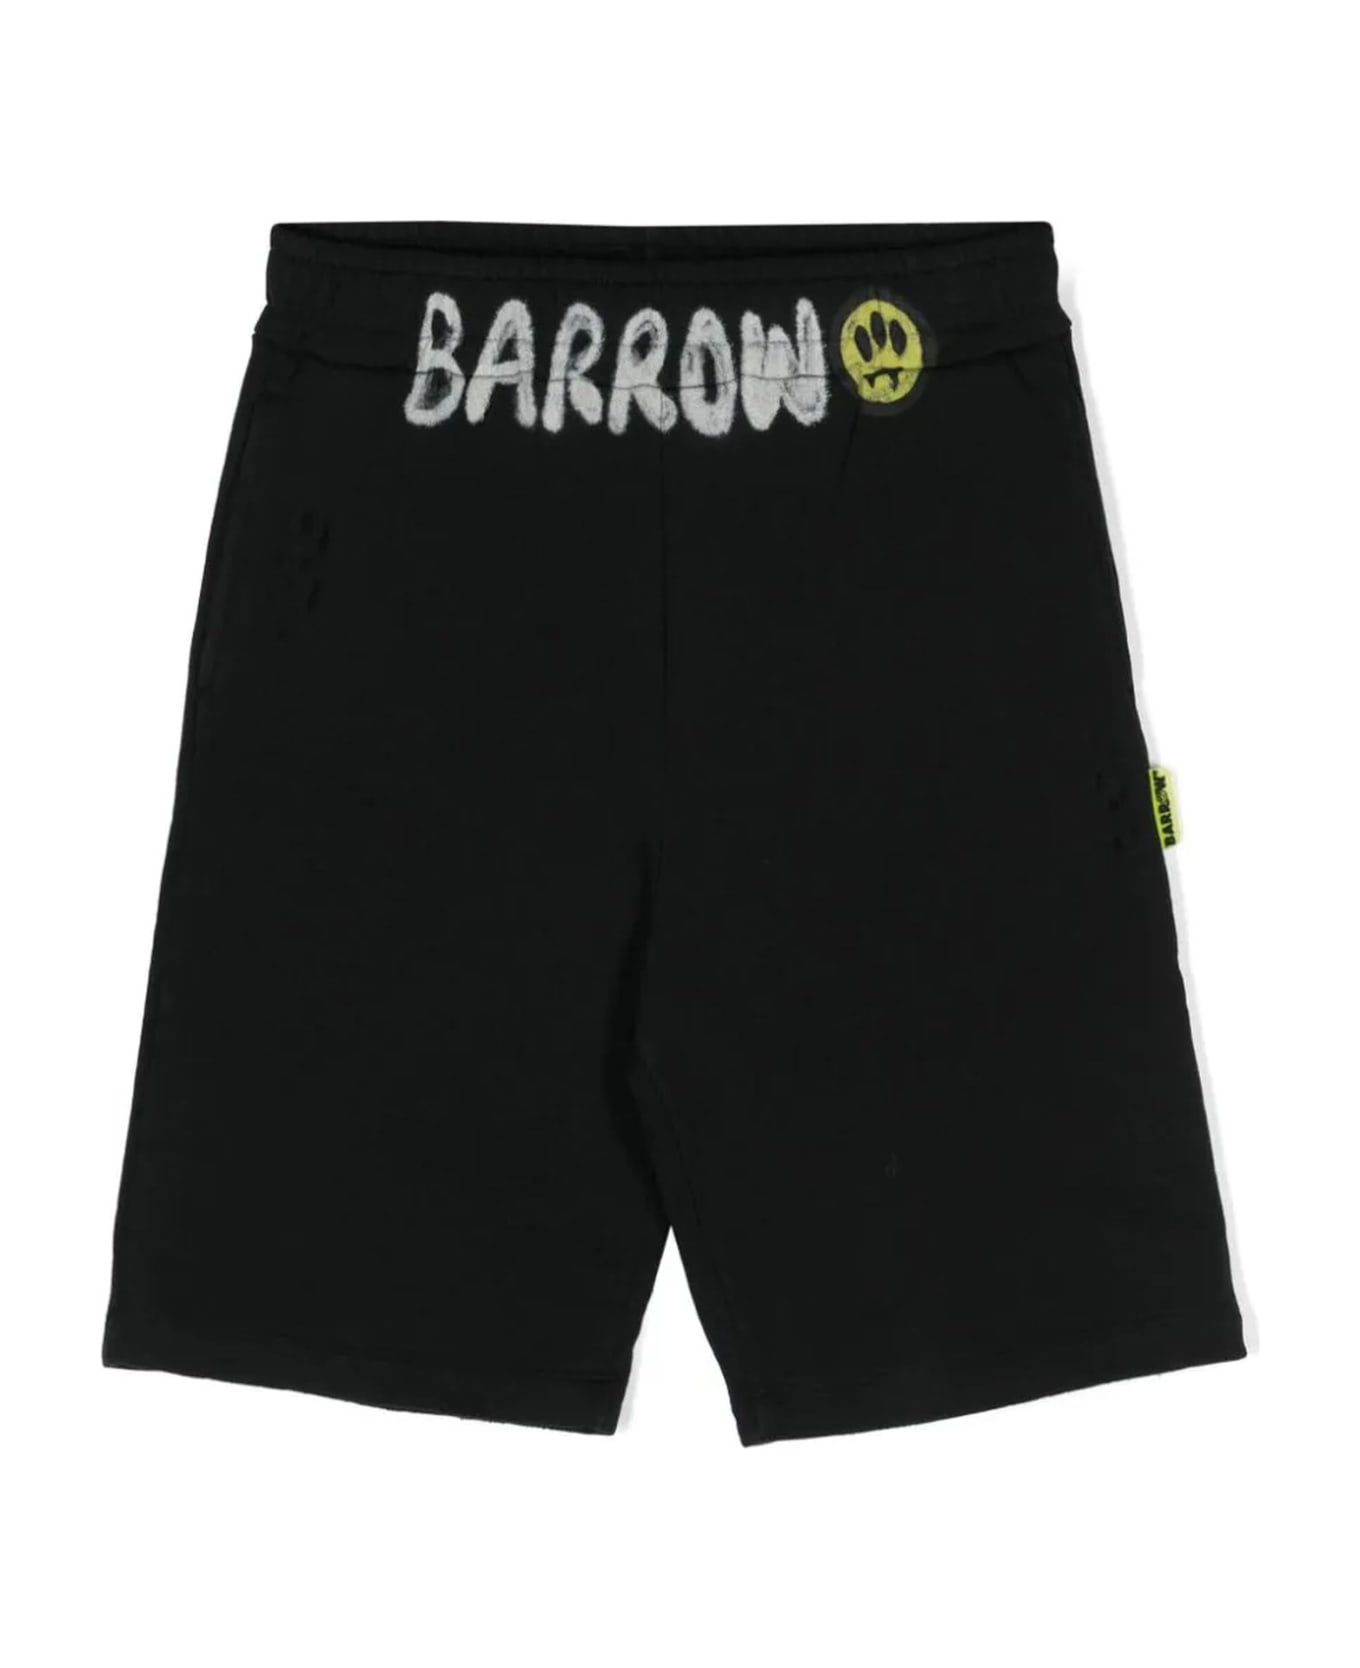 Barrow 's Shorts Black - Black